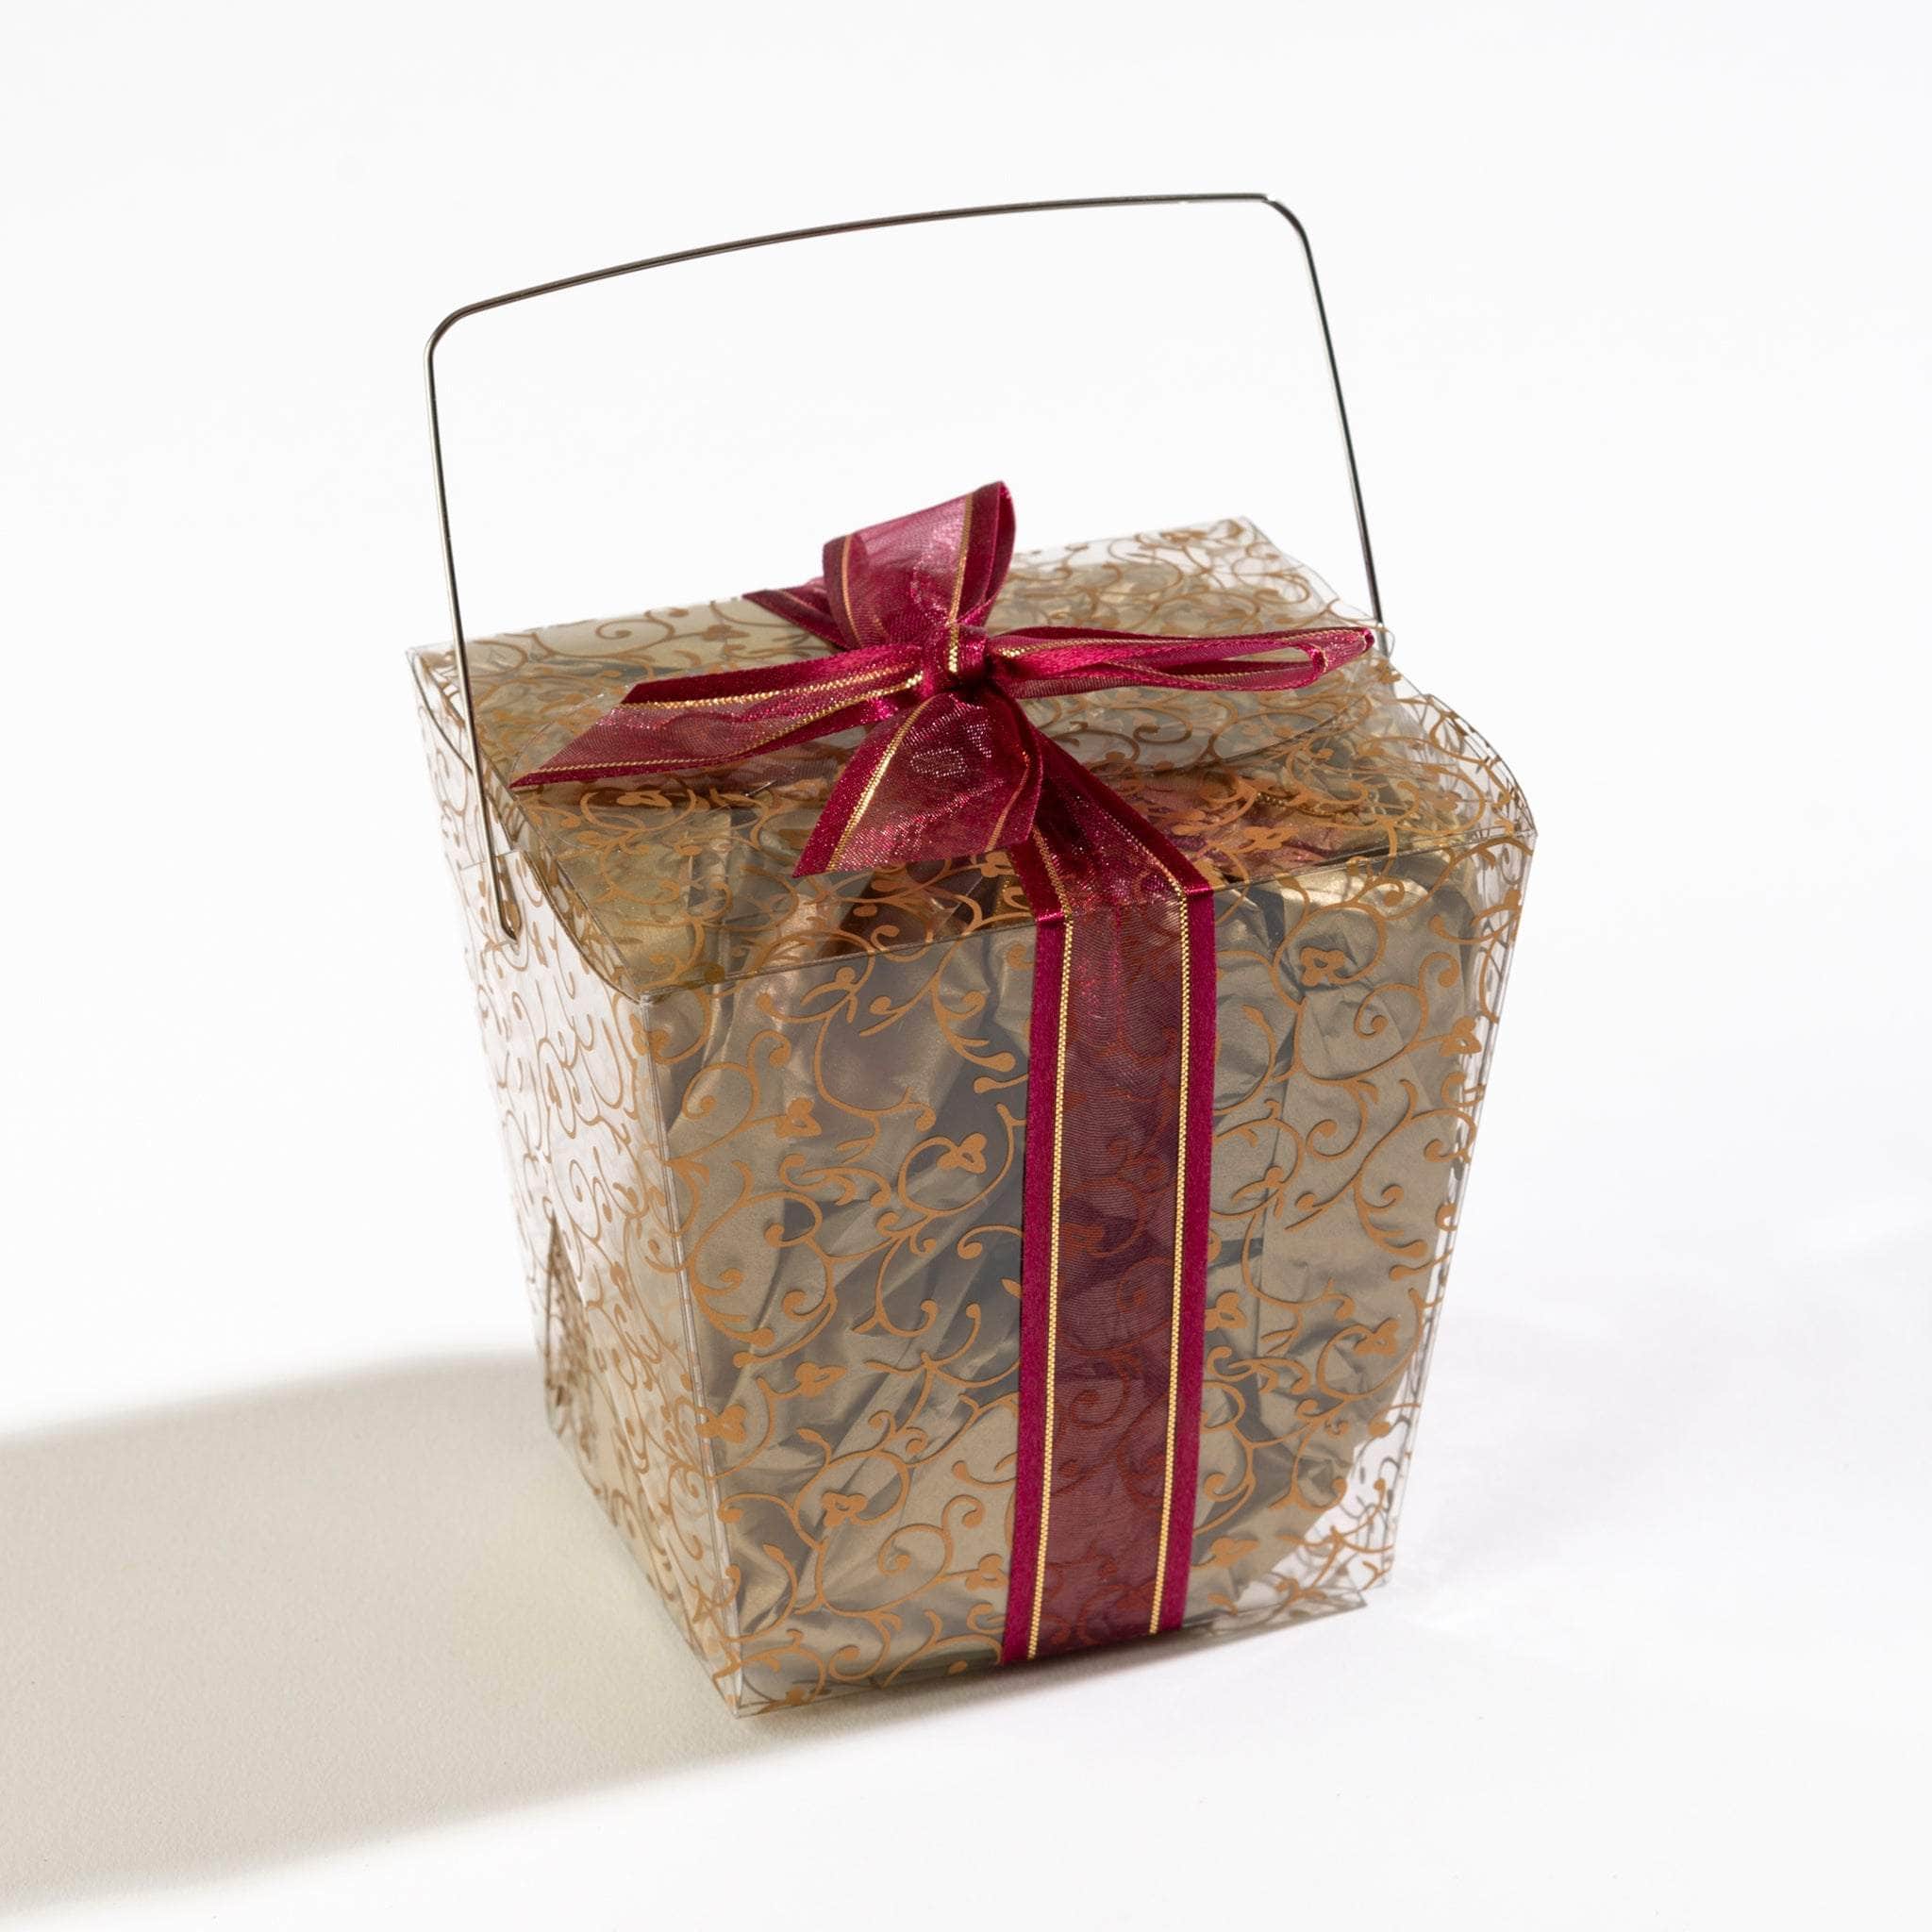 Timber Lake Take-Out Gift Box with 4 Treasures